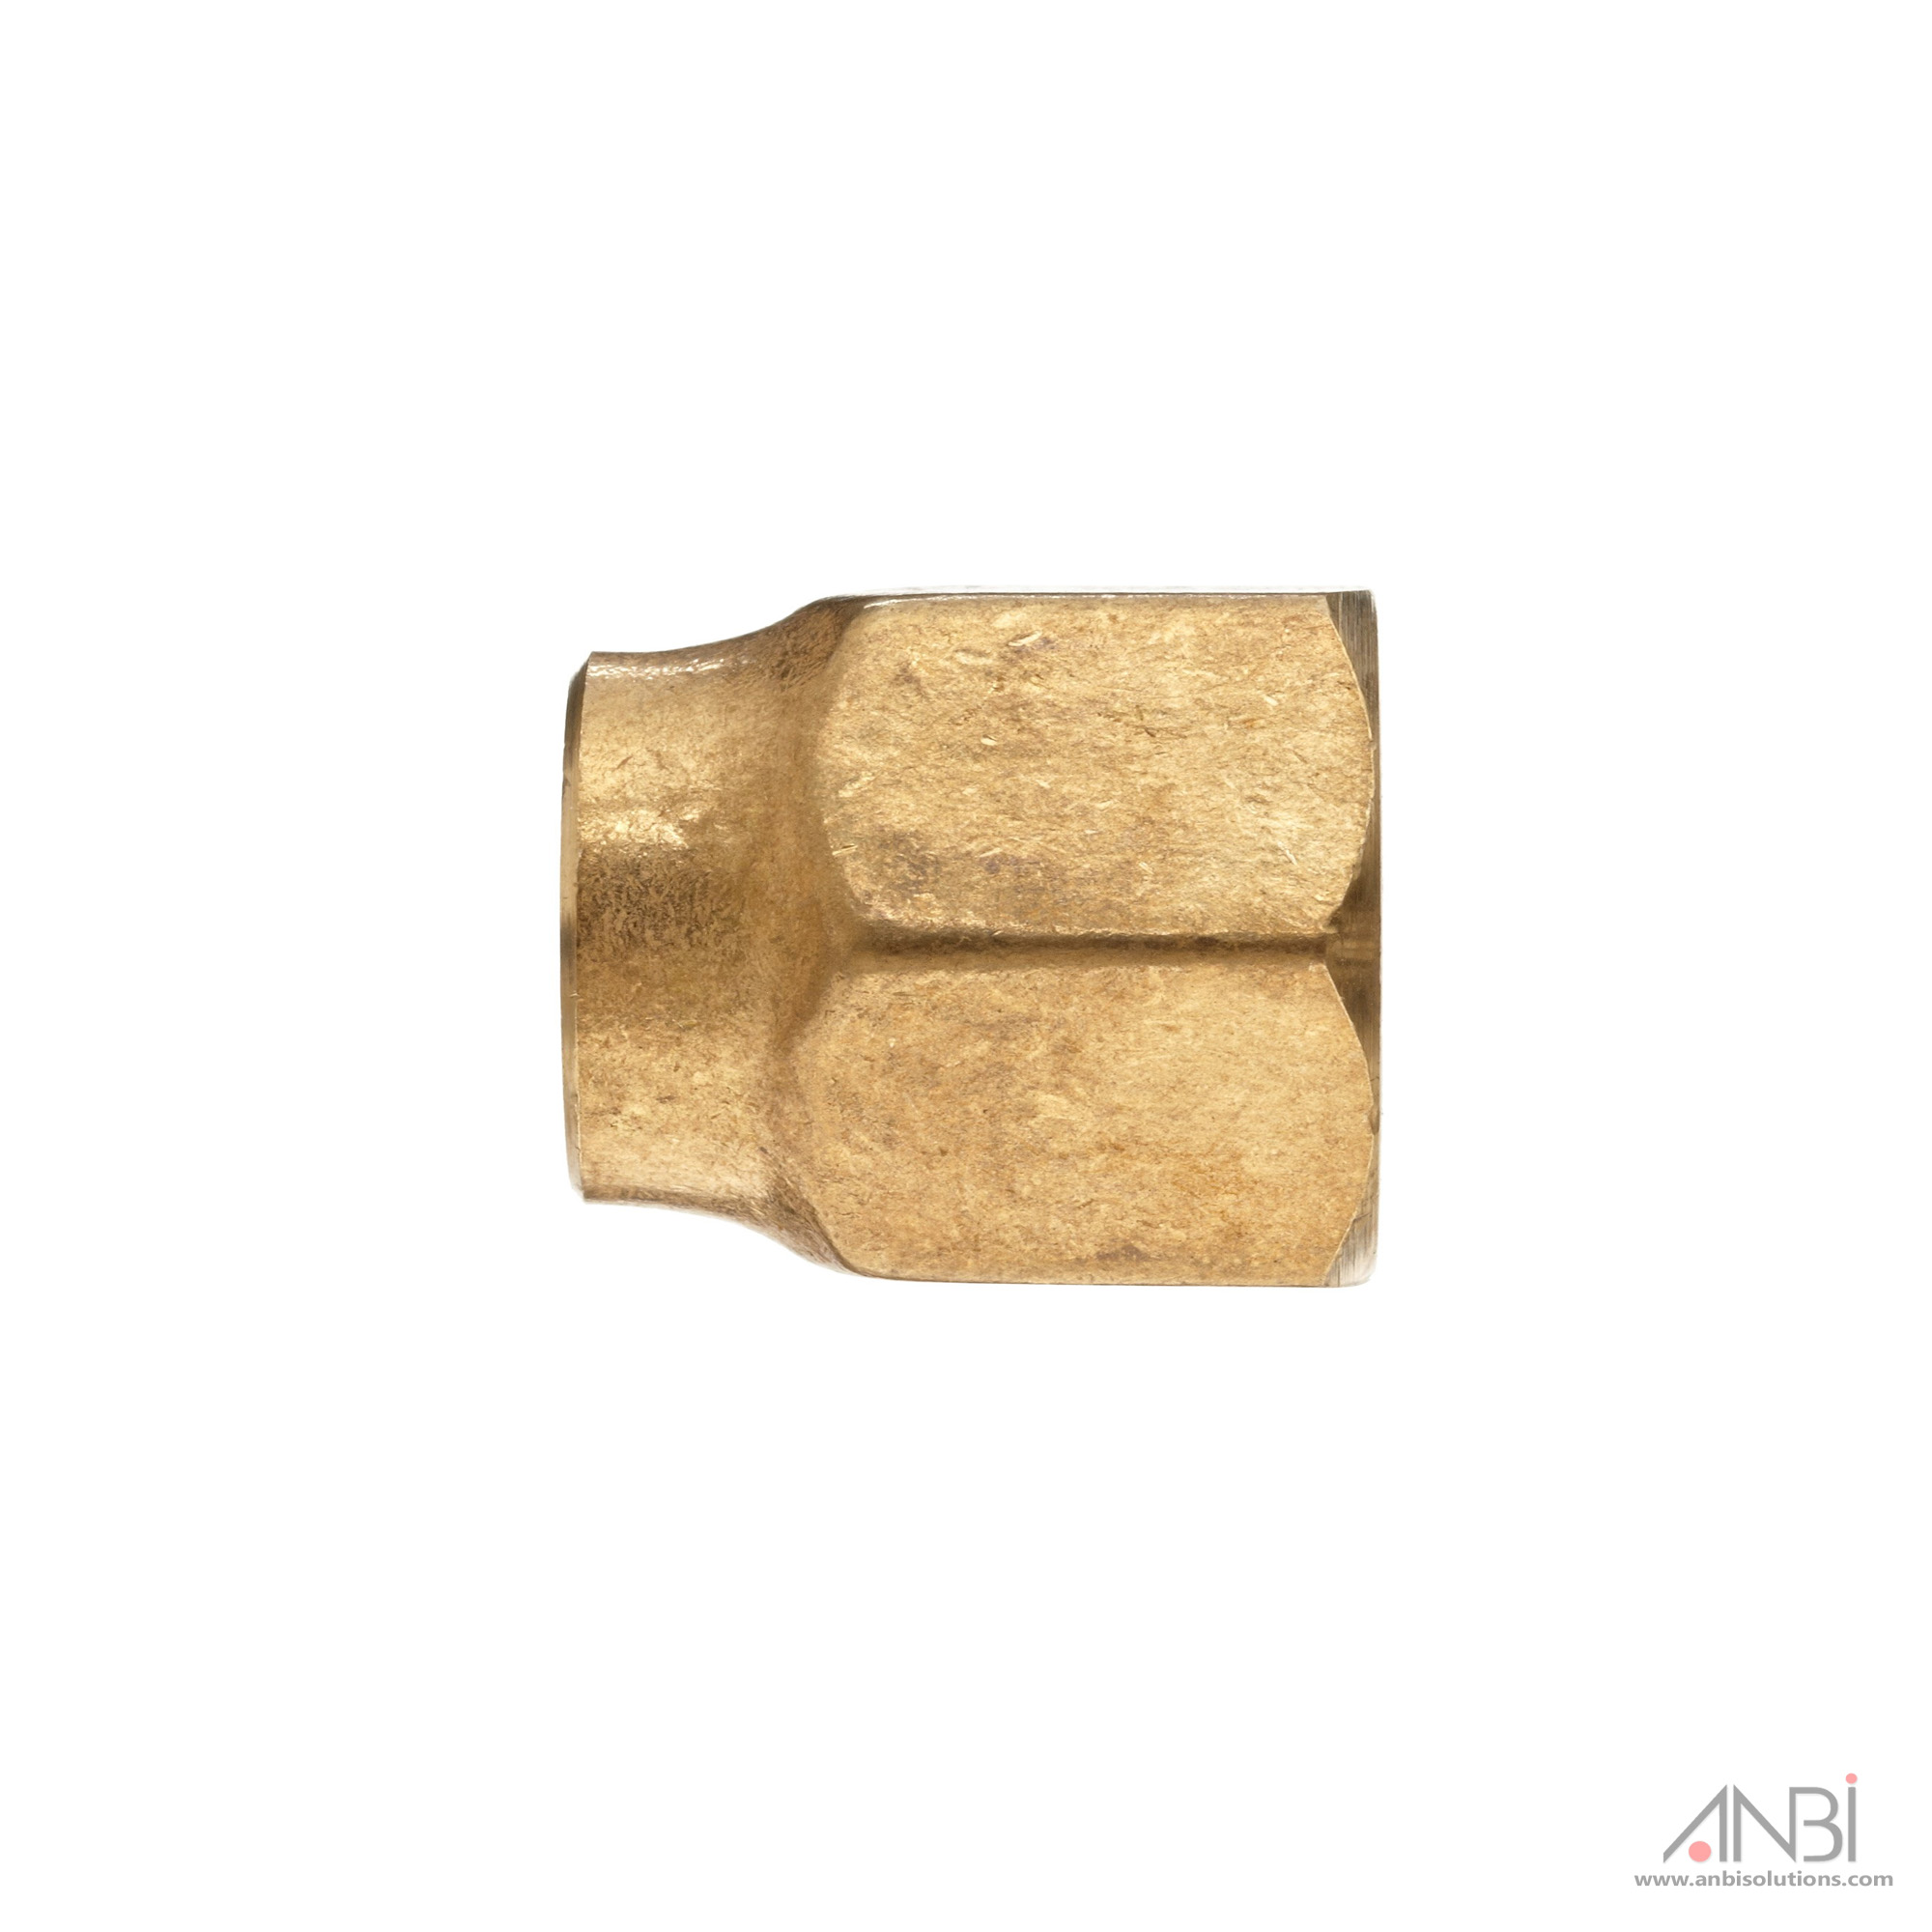 Flare Nut Brass Forged - ANBI Online